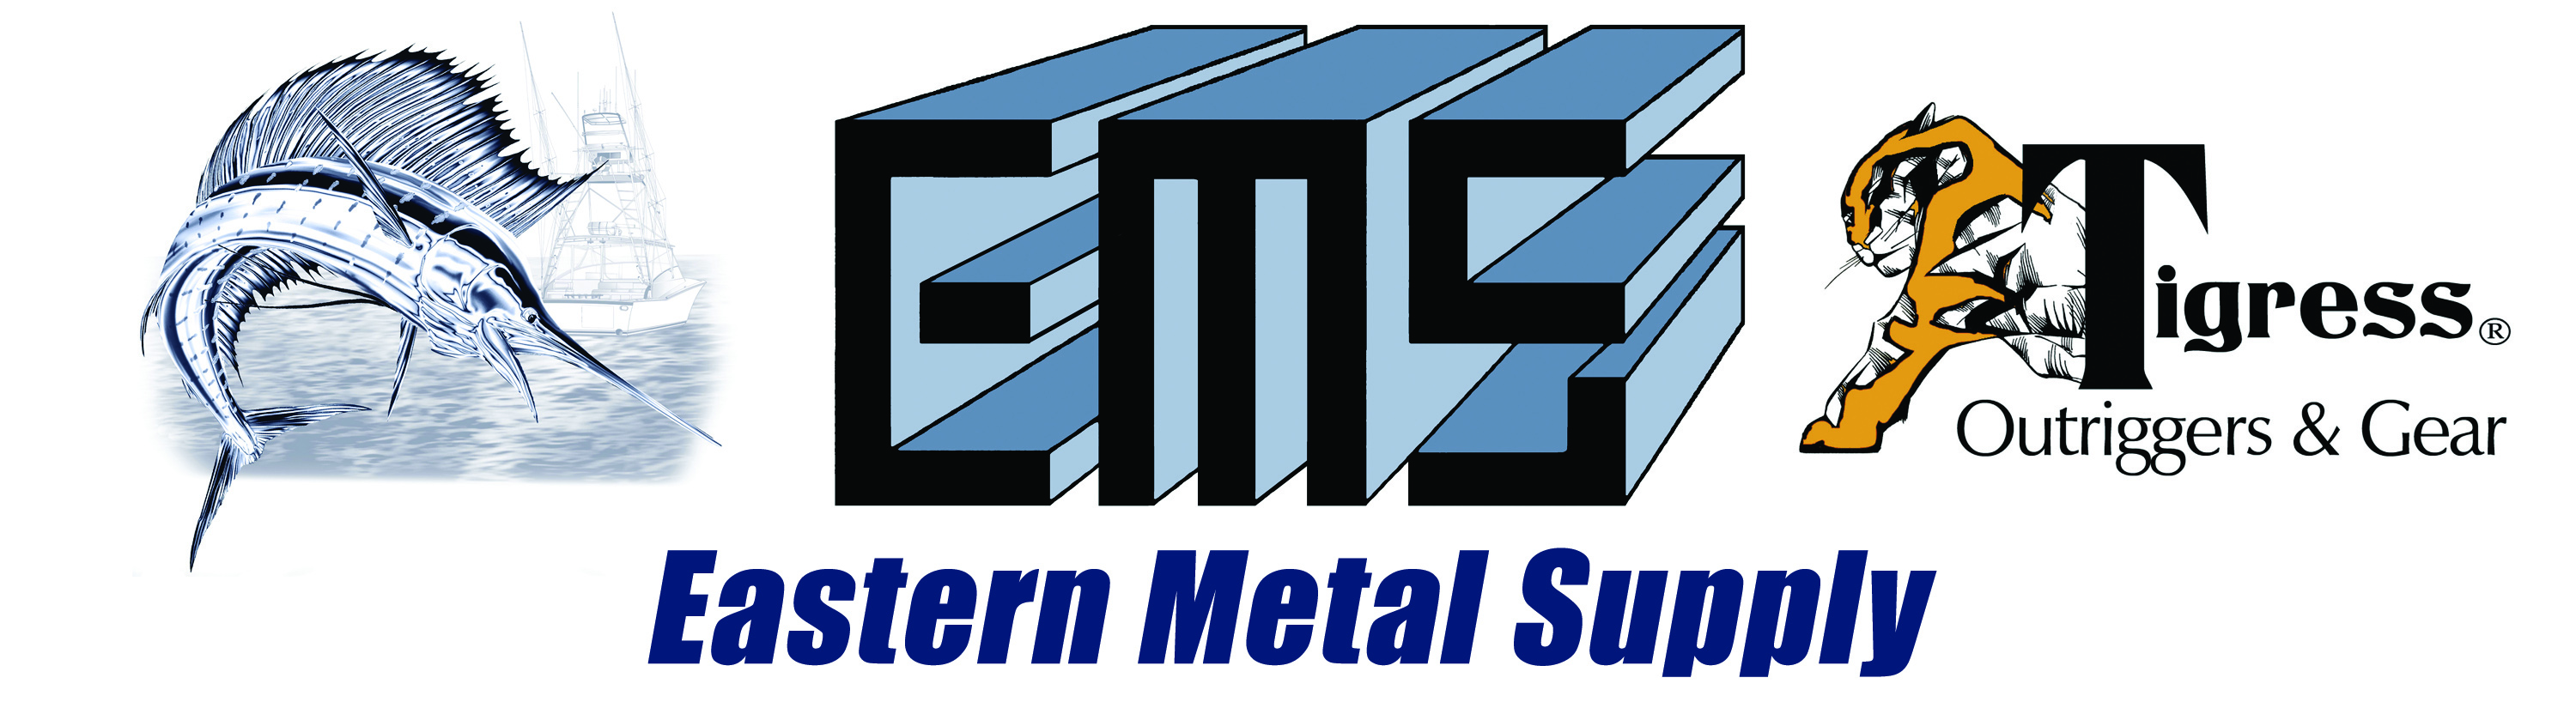 Eastern Metal Supply Bolsters Marine Division with Tigress Acquisition eastern metal supply phone number